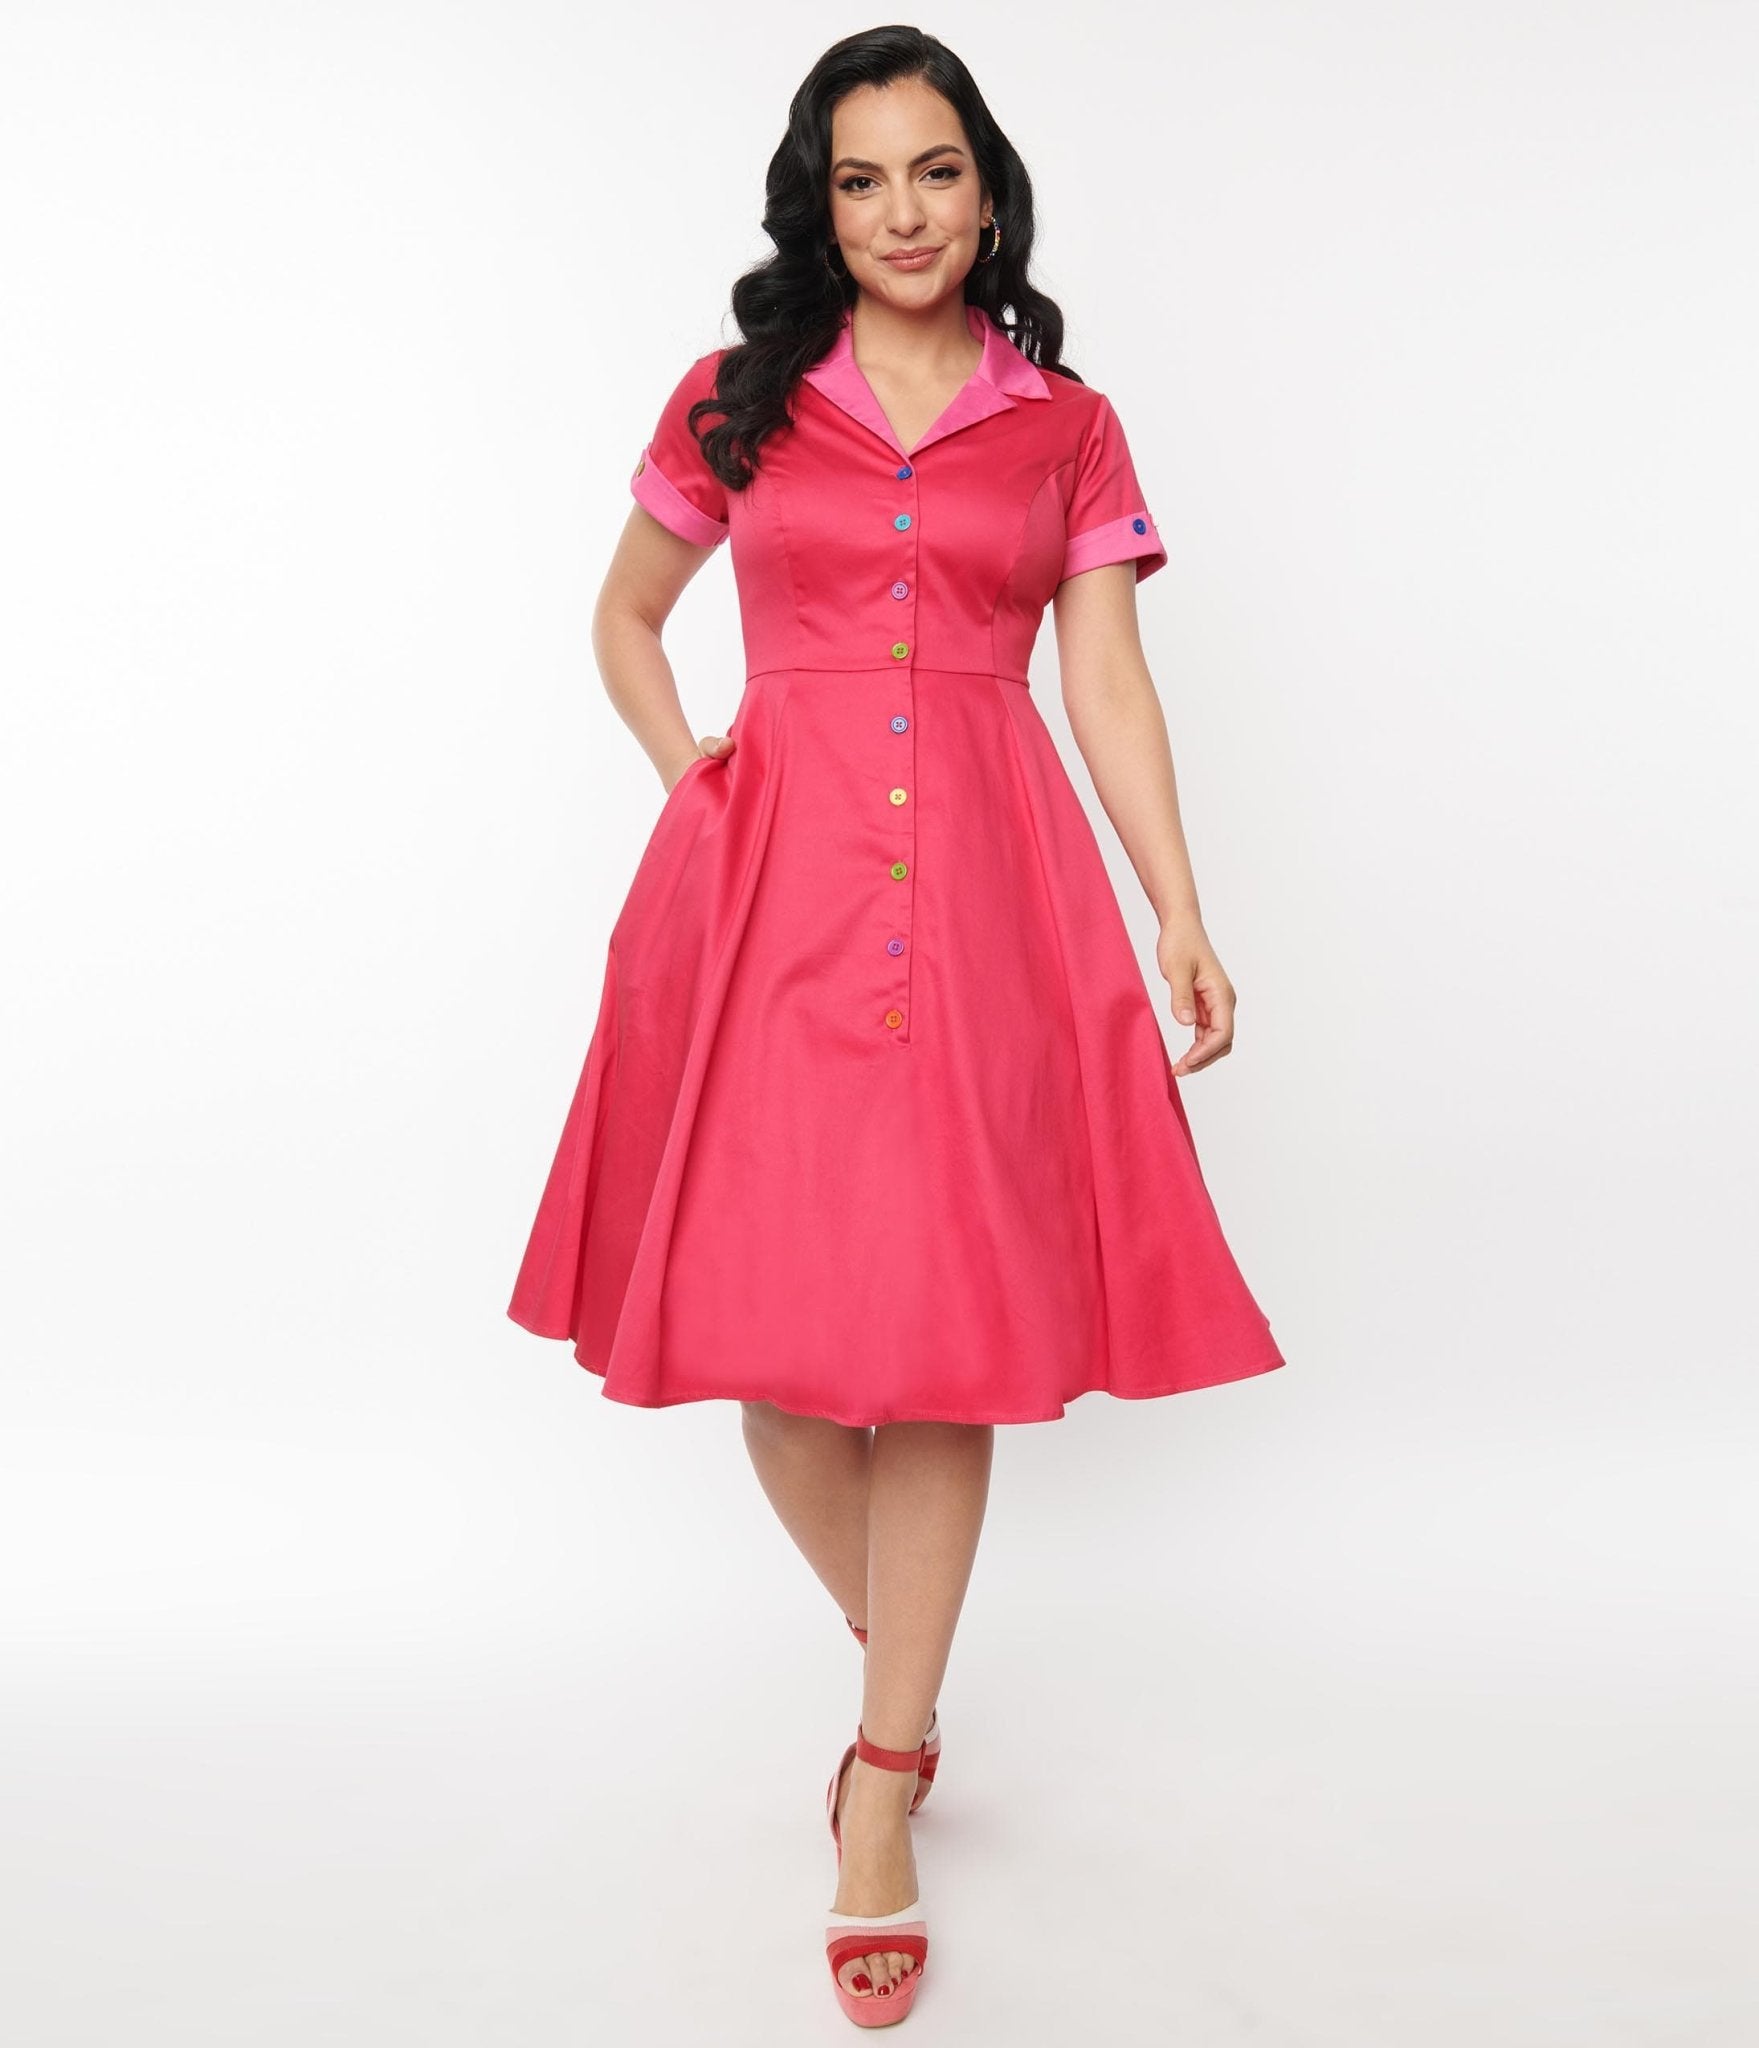 Women's High Neck Fringe Dress - Red, Size XL by Venus